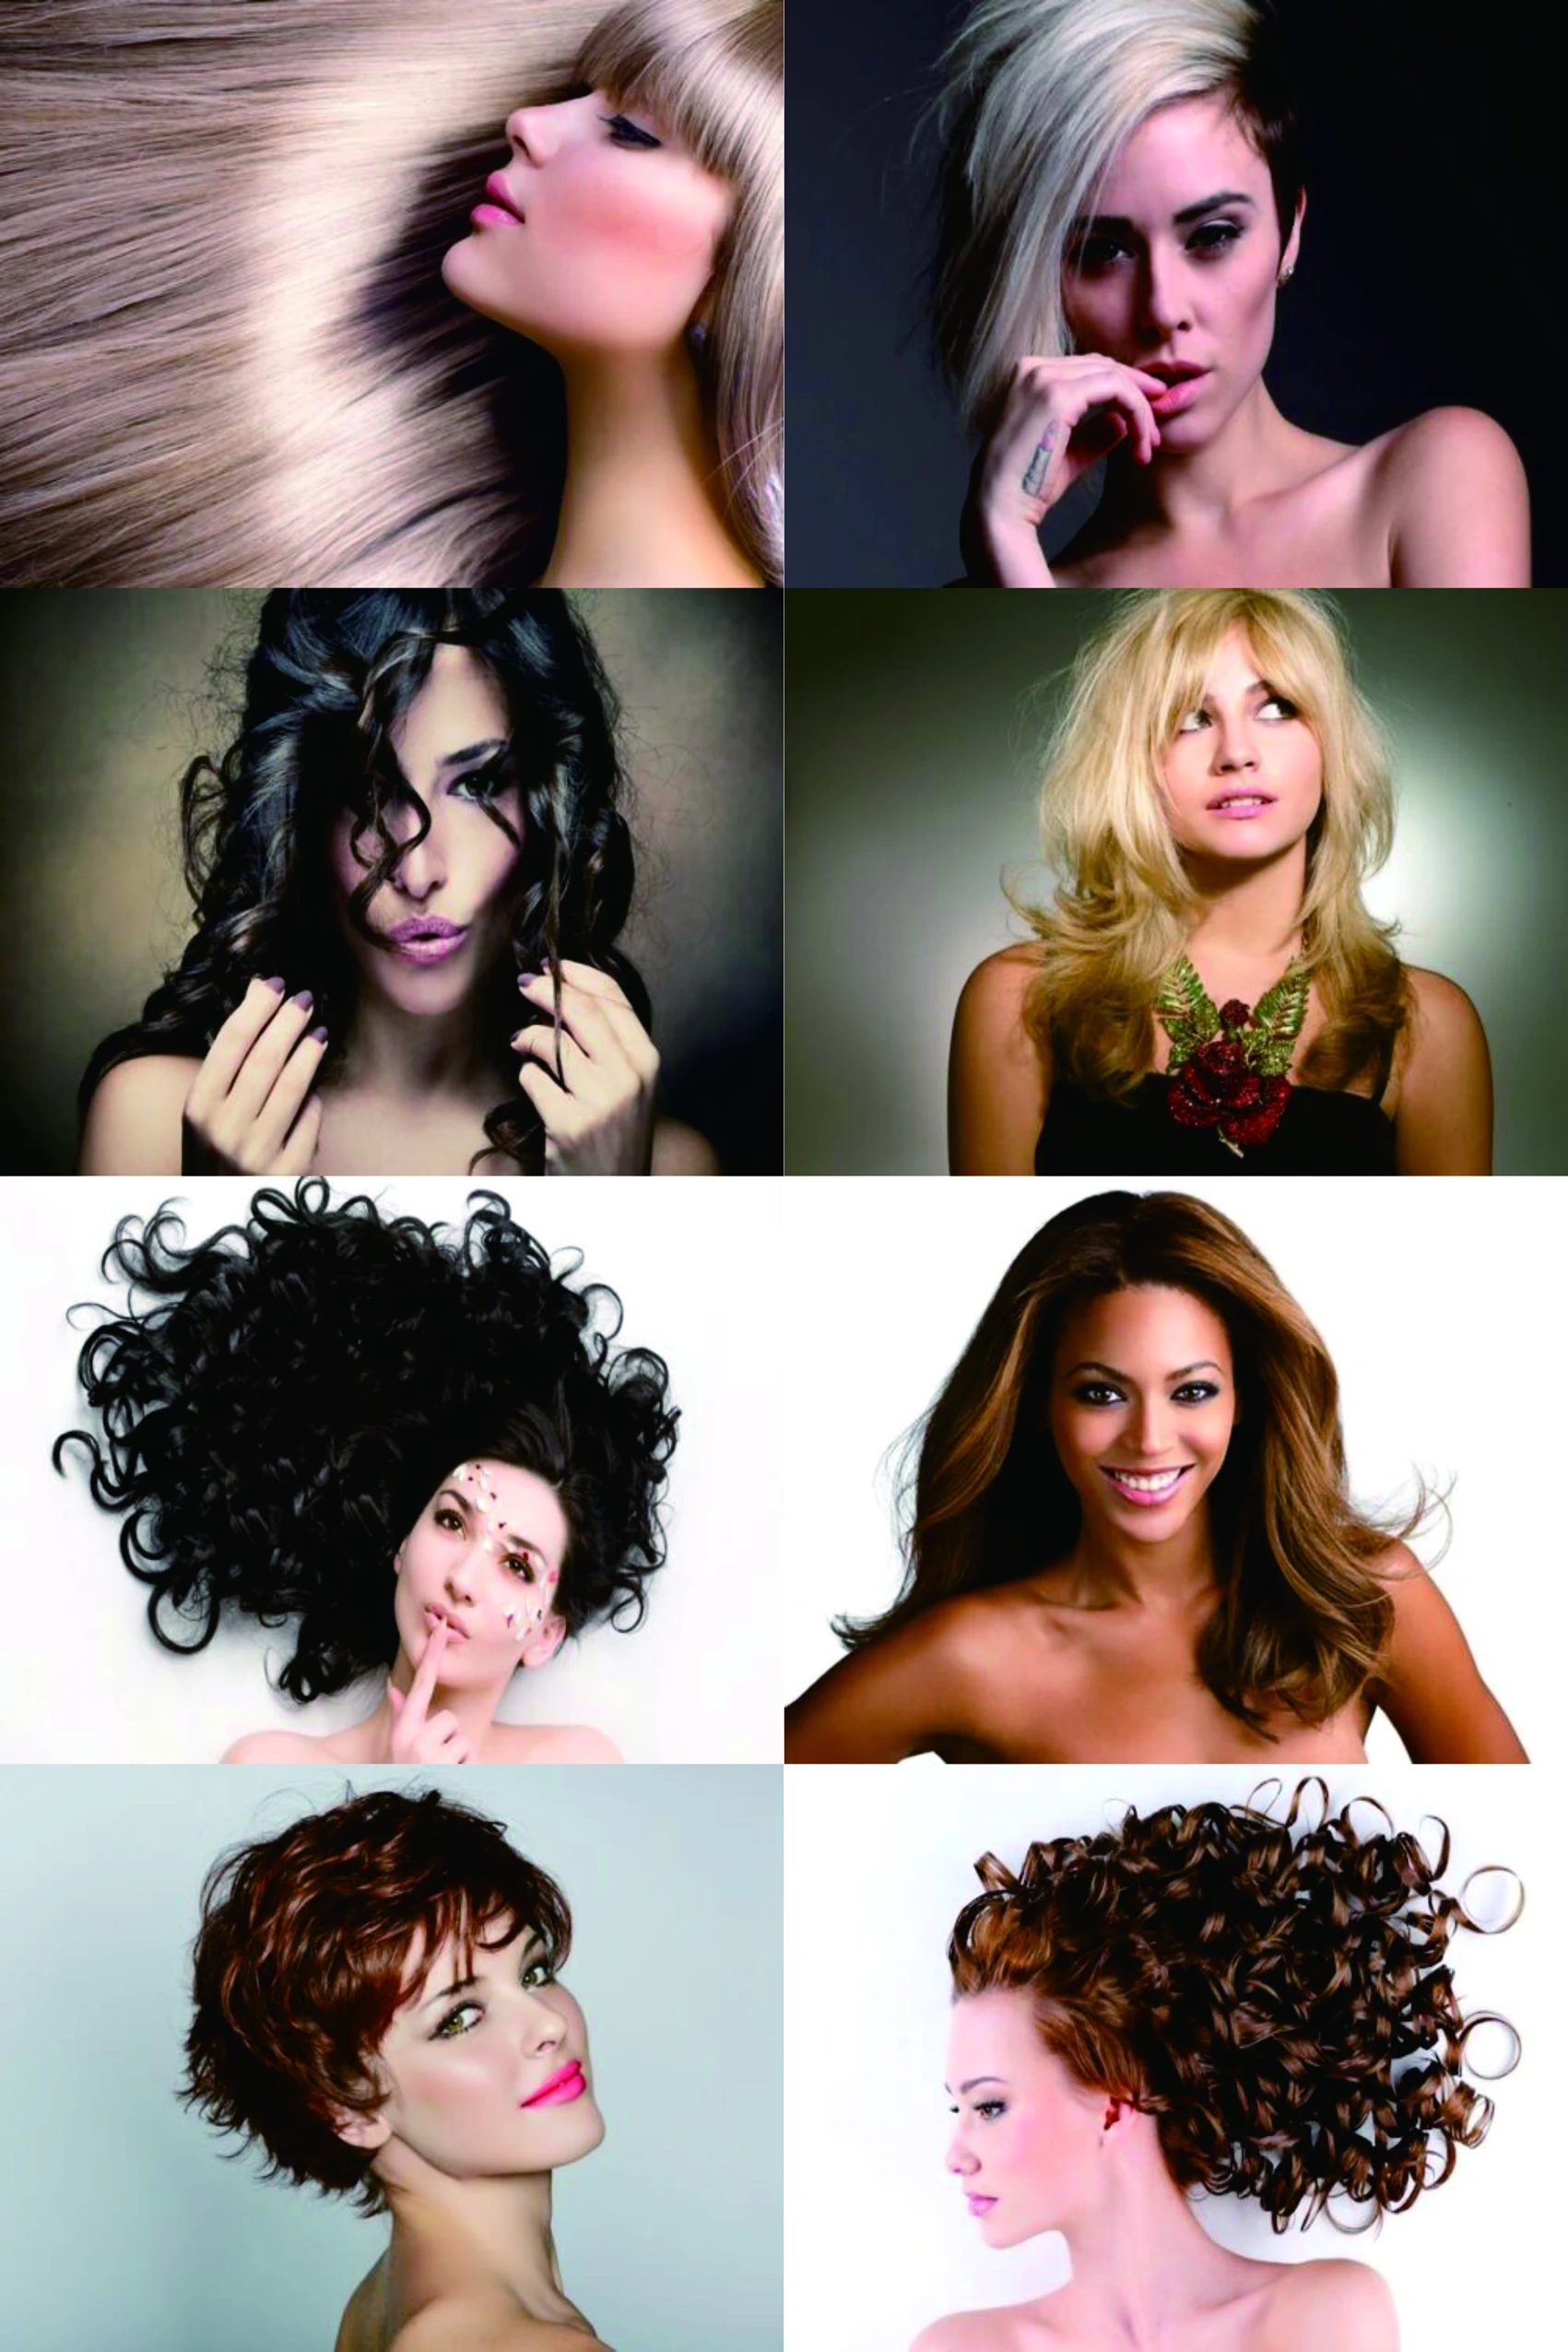 

7style choose HAIR SALON WOMENS HAIRSTYLE MODELS HAIRDRESSER Art Film Print Silk Poster Home Wall Decor 24x36inch